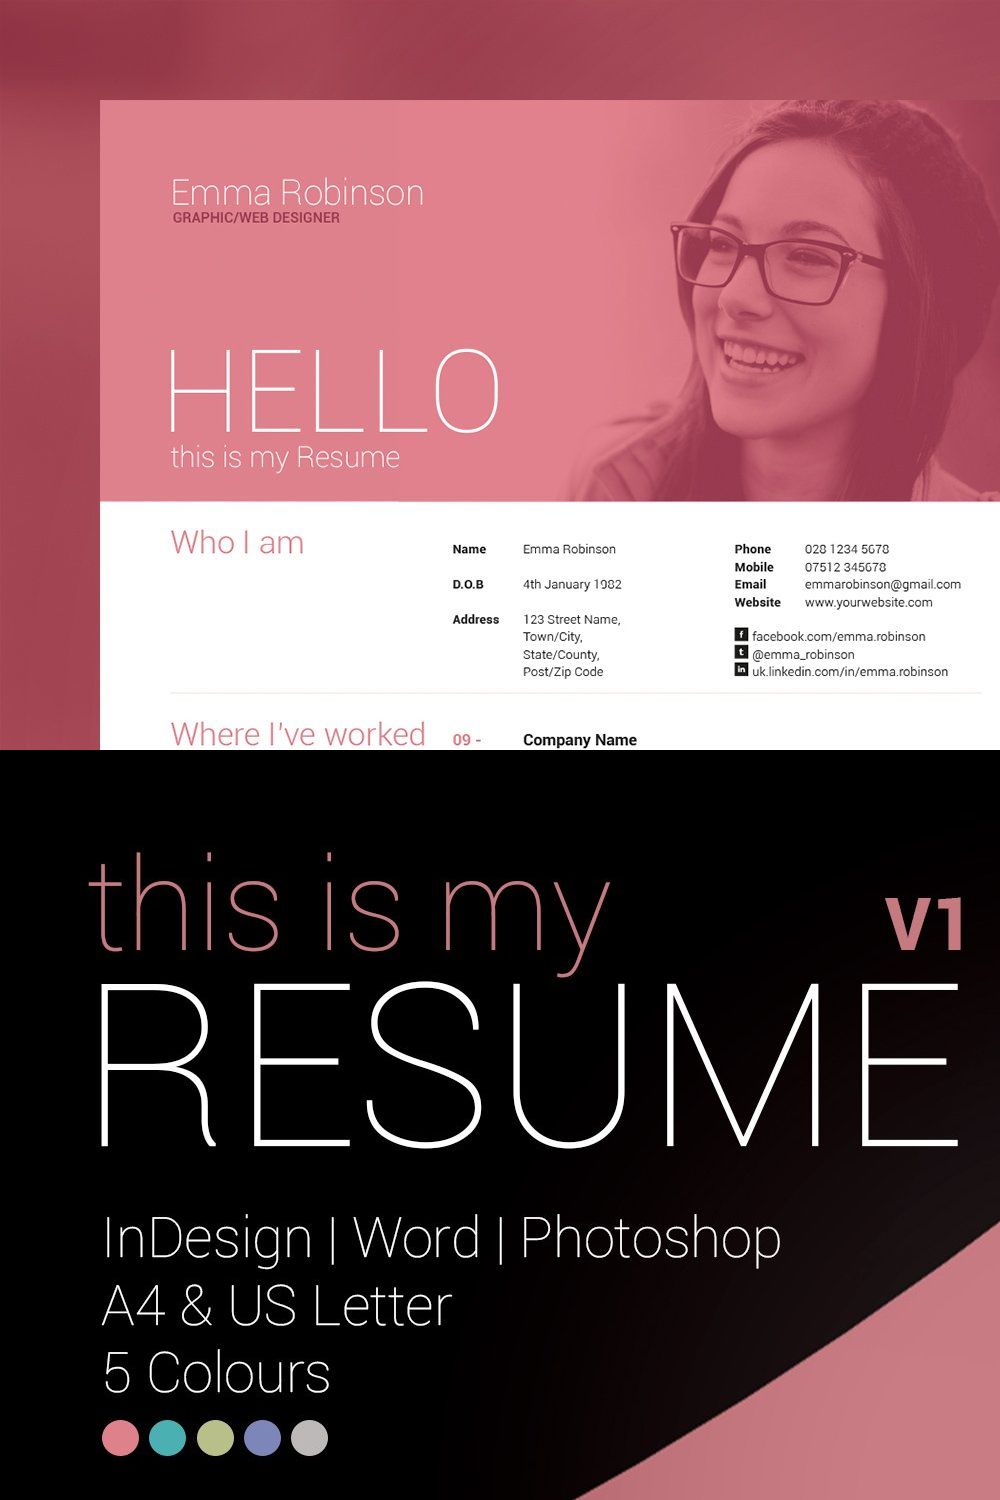 My Resume V1 pinterest preview image.